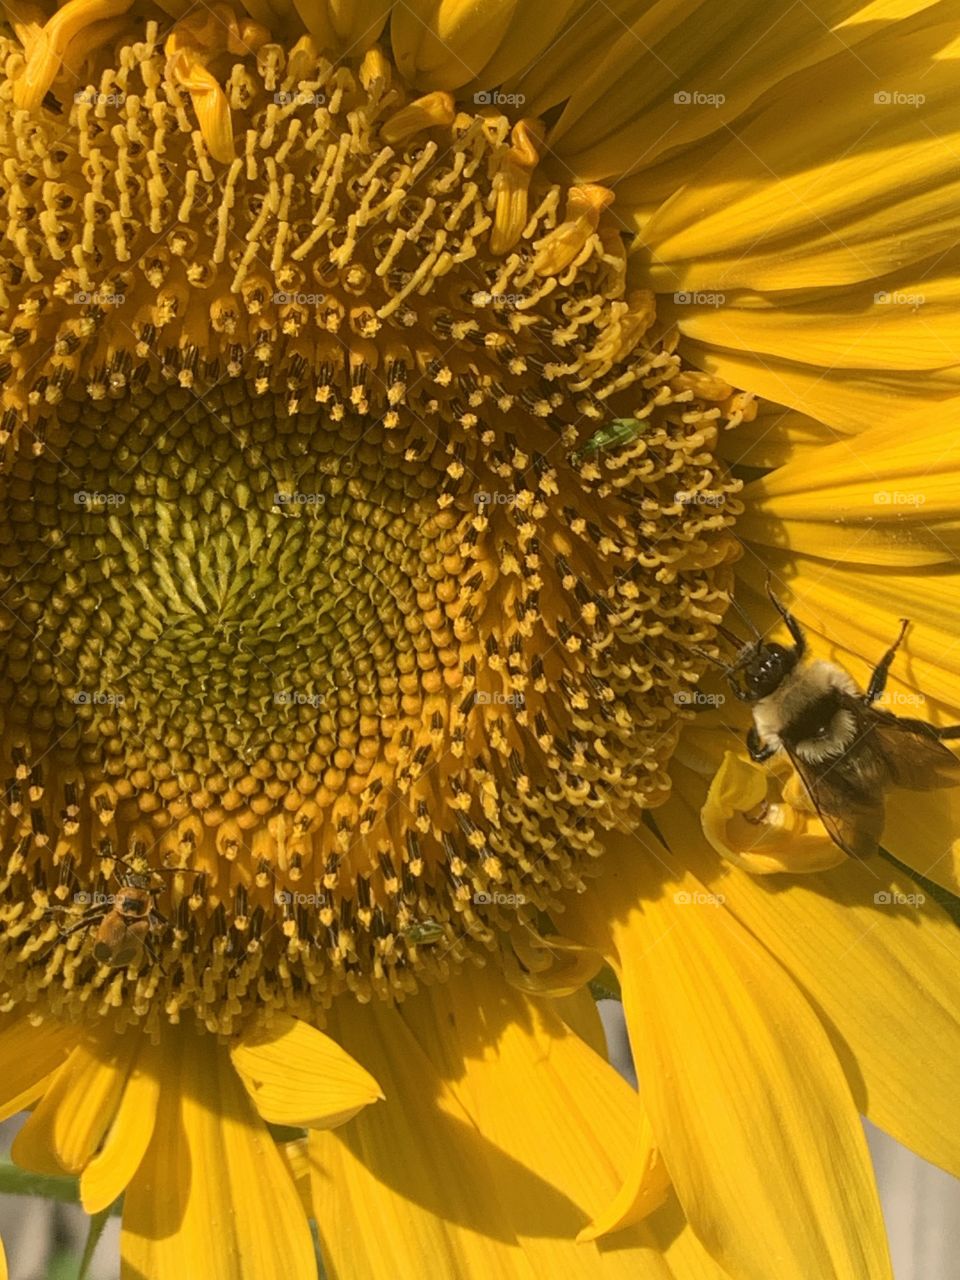 Bumblebee flower